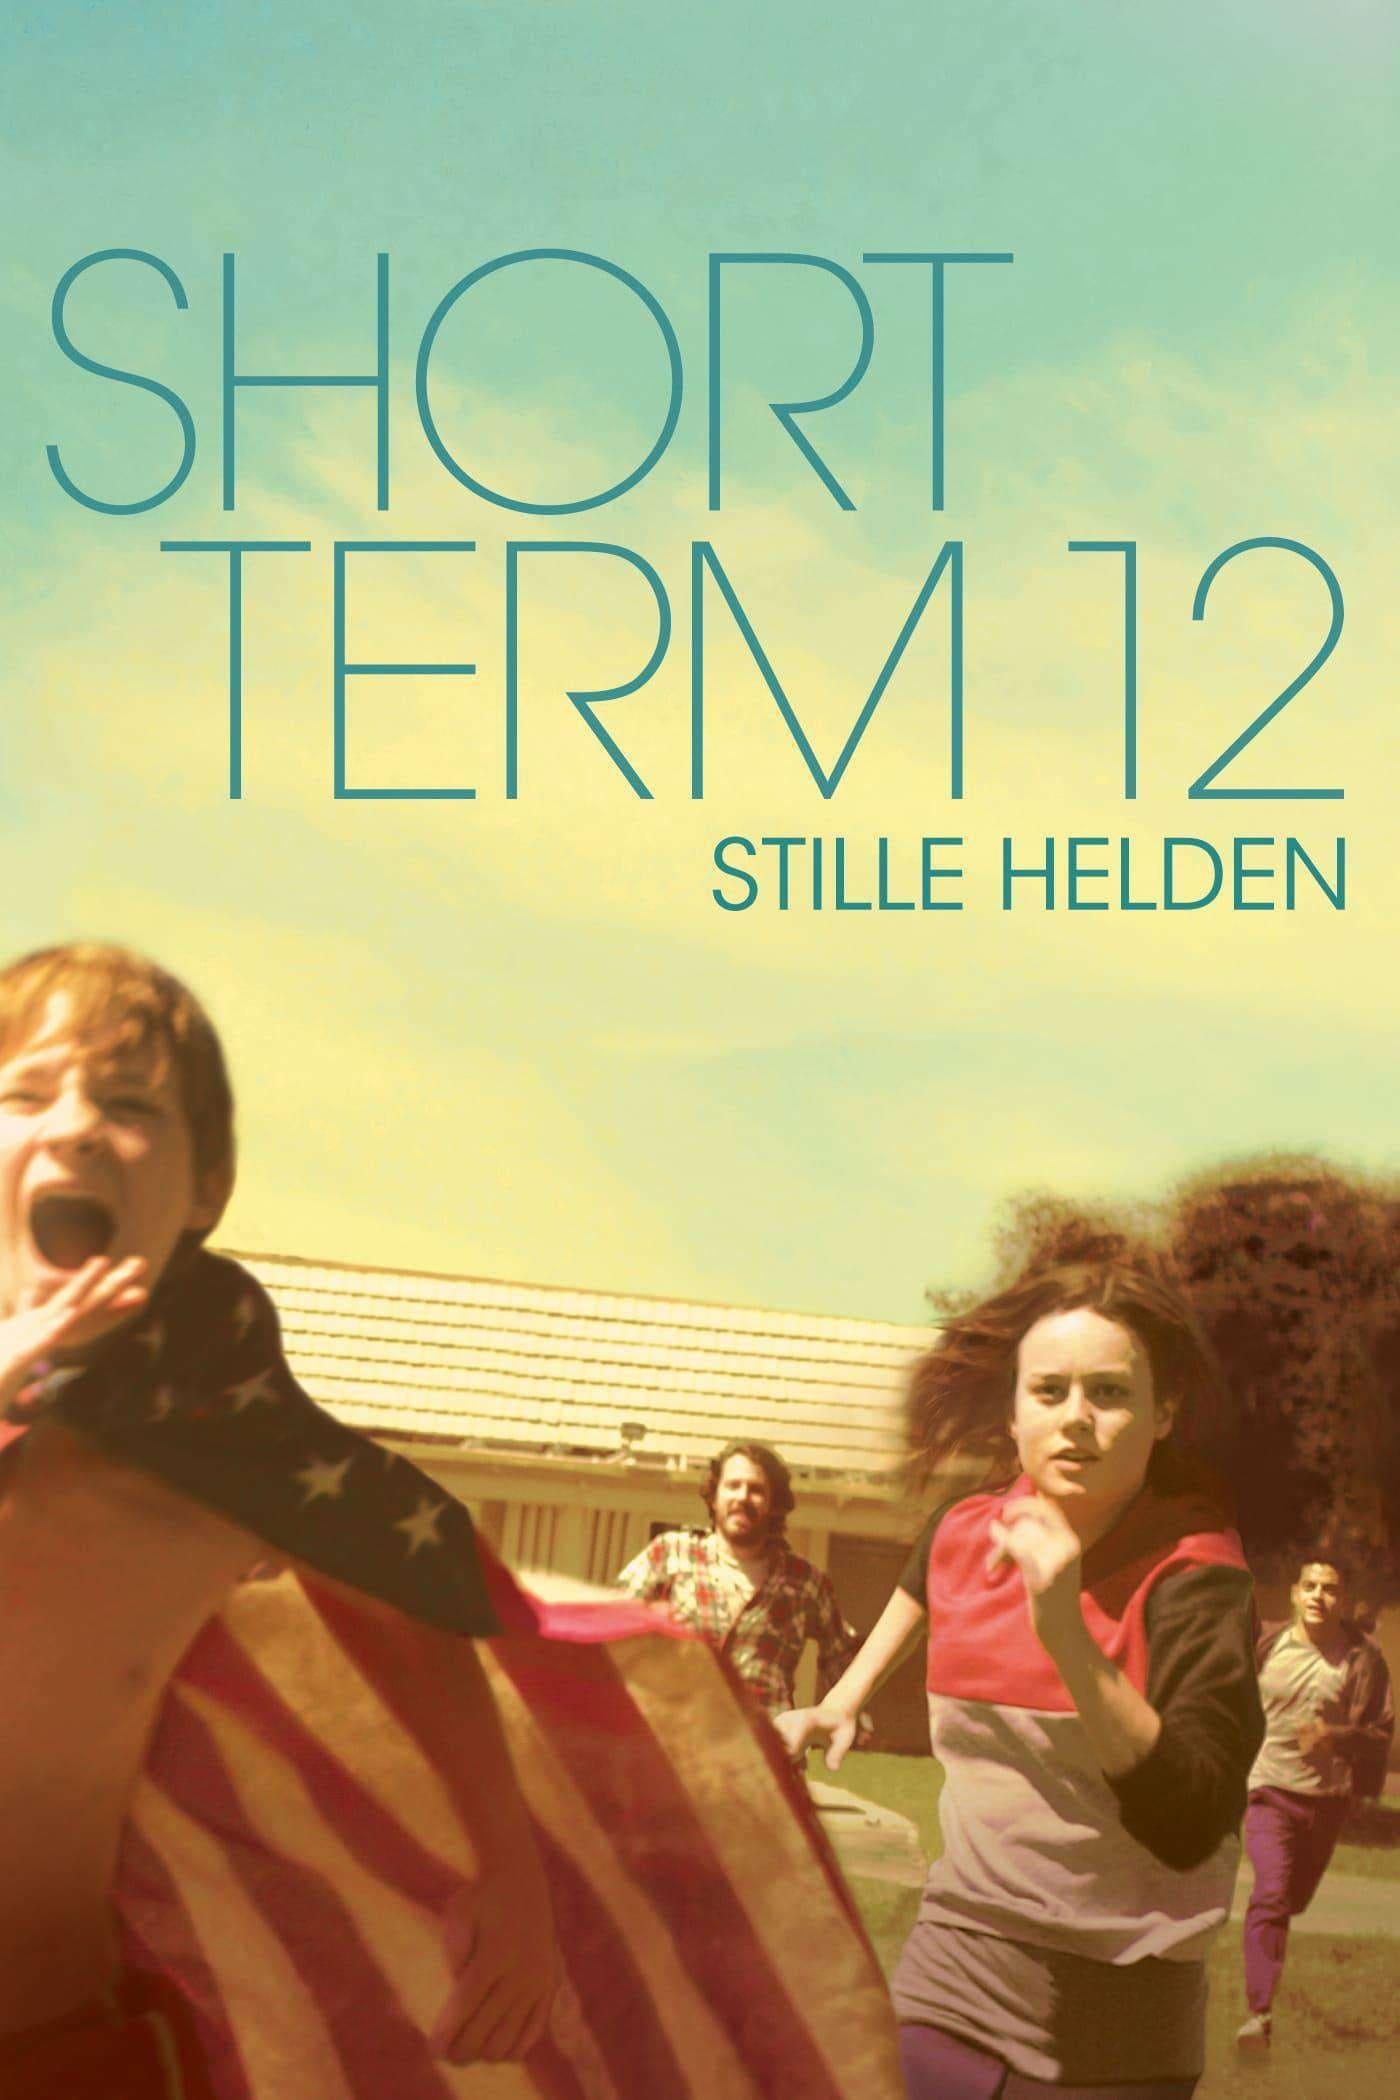 Short Term 12 - Stille Helden poster